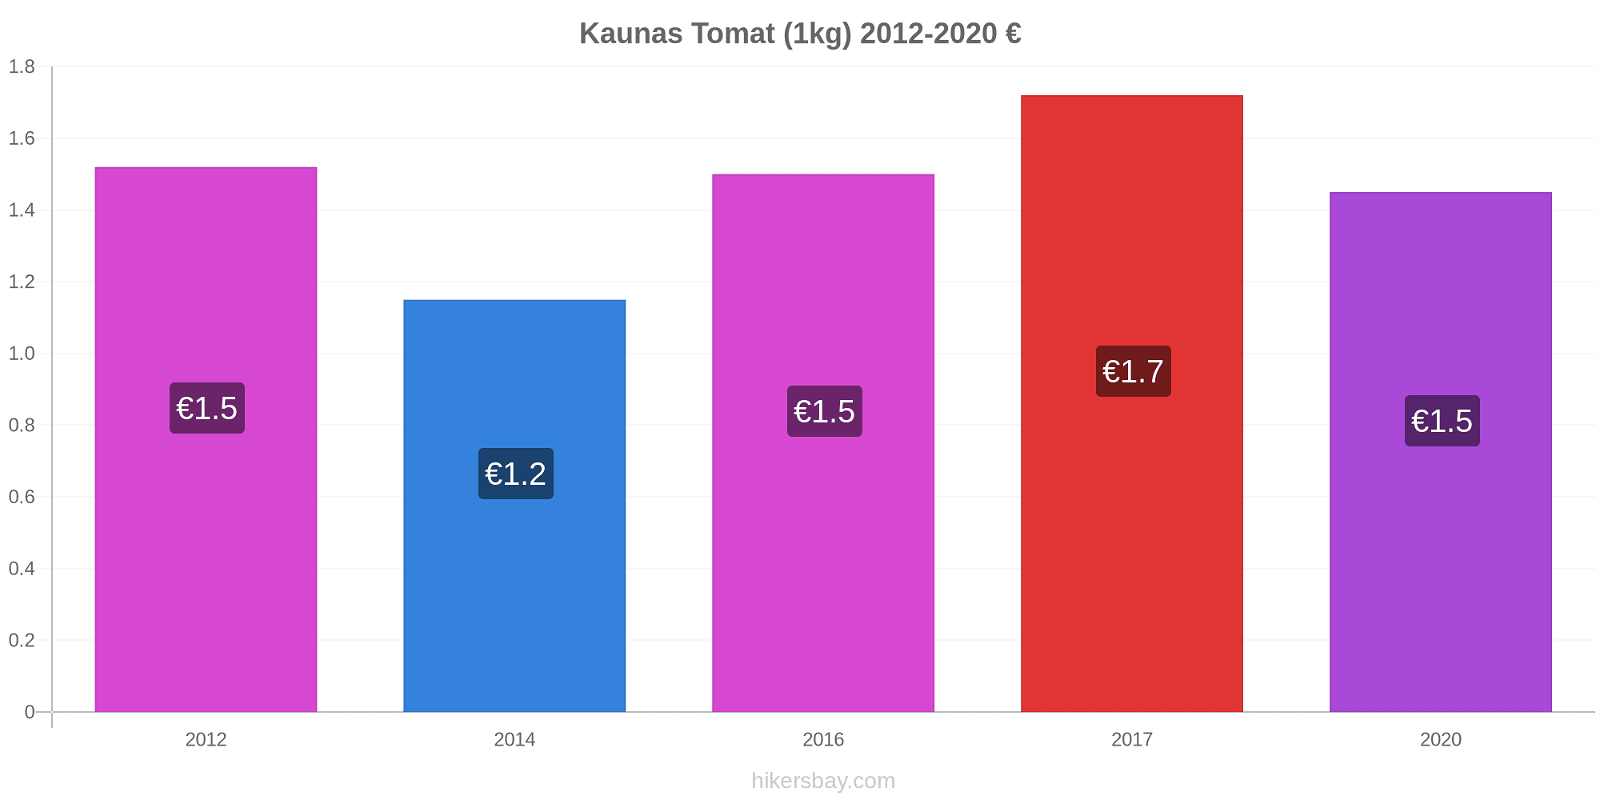 Kaunas prisendringer Tomat (1kg) hikersbay.com